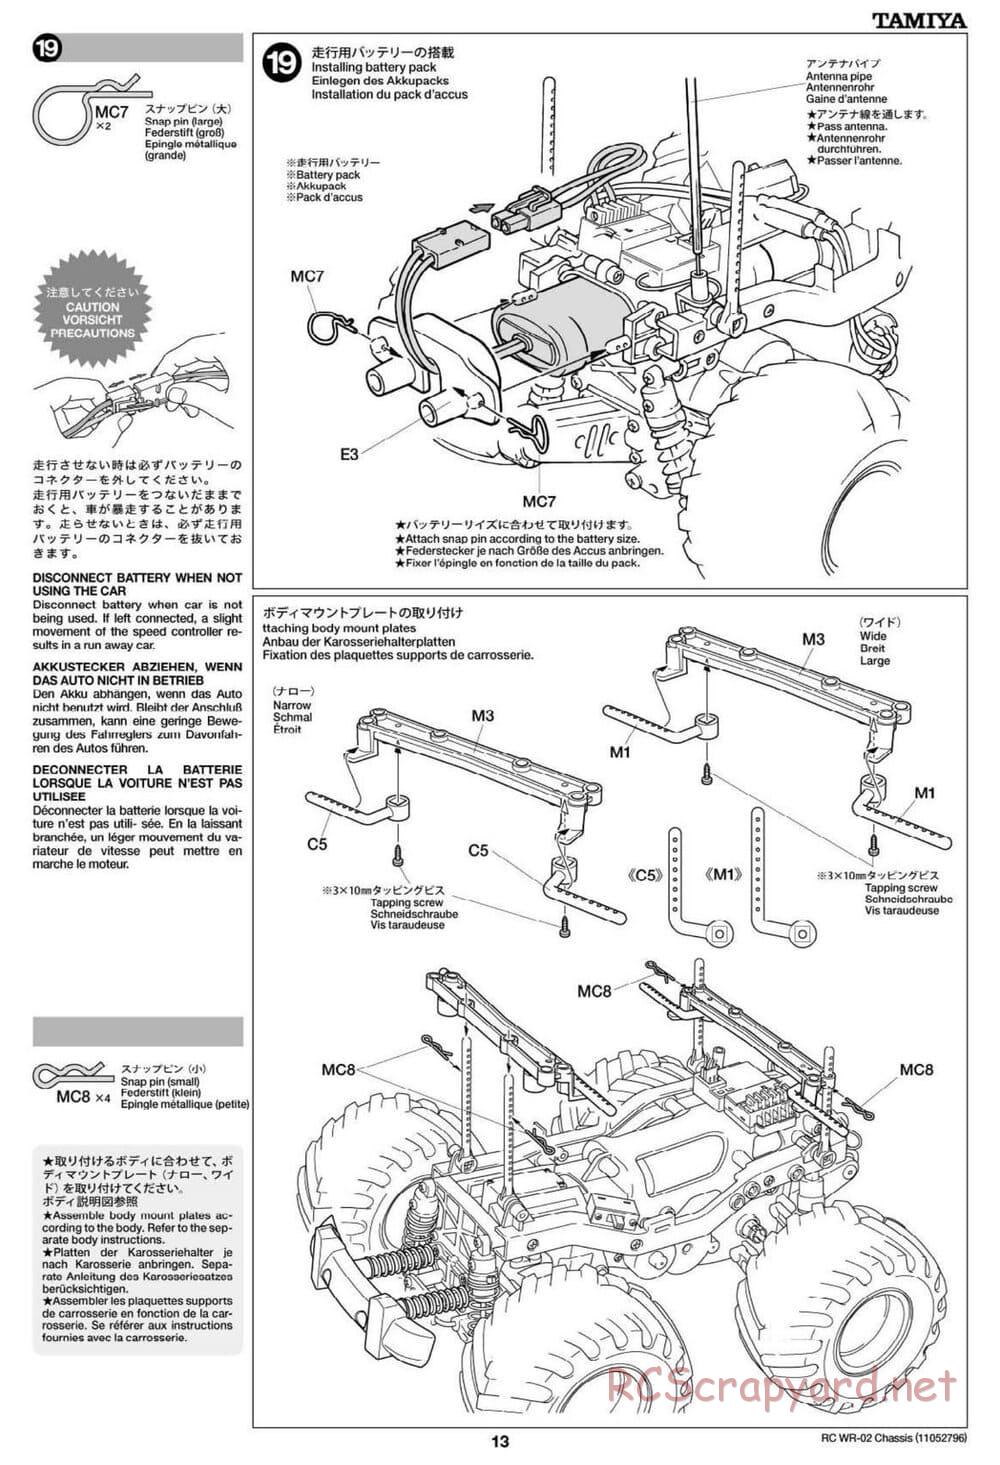 Tamiya - WR-02 Chassis - Manual - Page 13